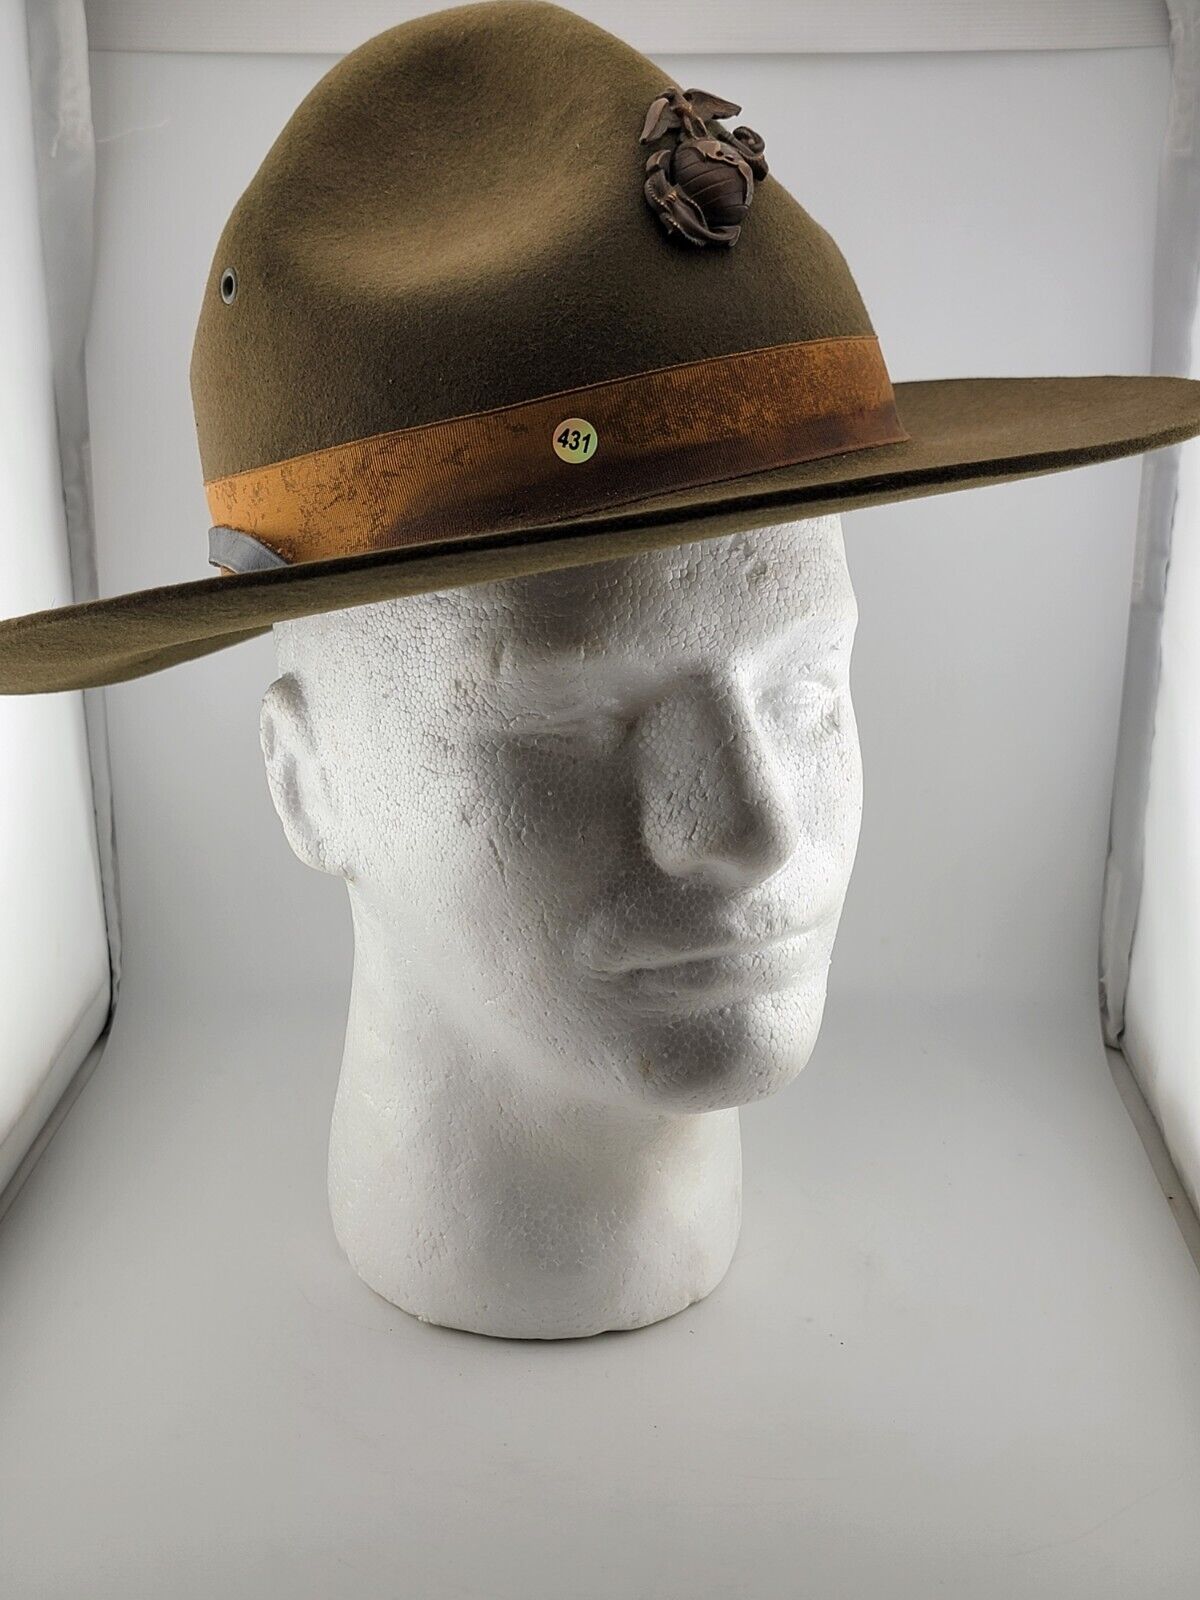 RARE ORIGINAL WWII USMC MARINE CORPS STETSON CAMPAIGN DRILL SERGEANT HAT EGA